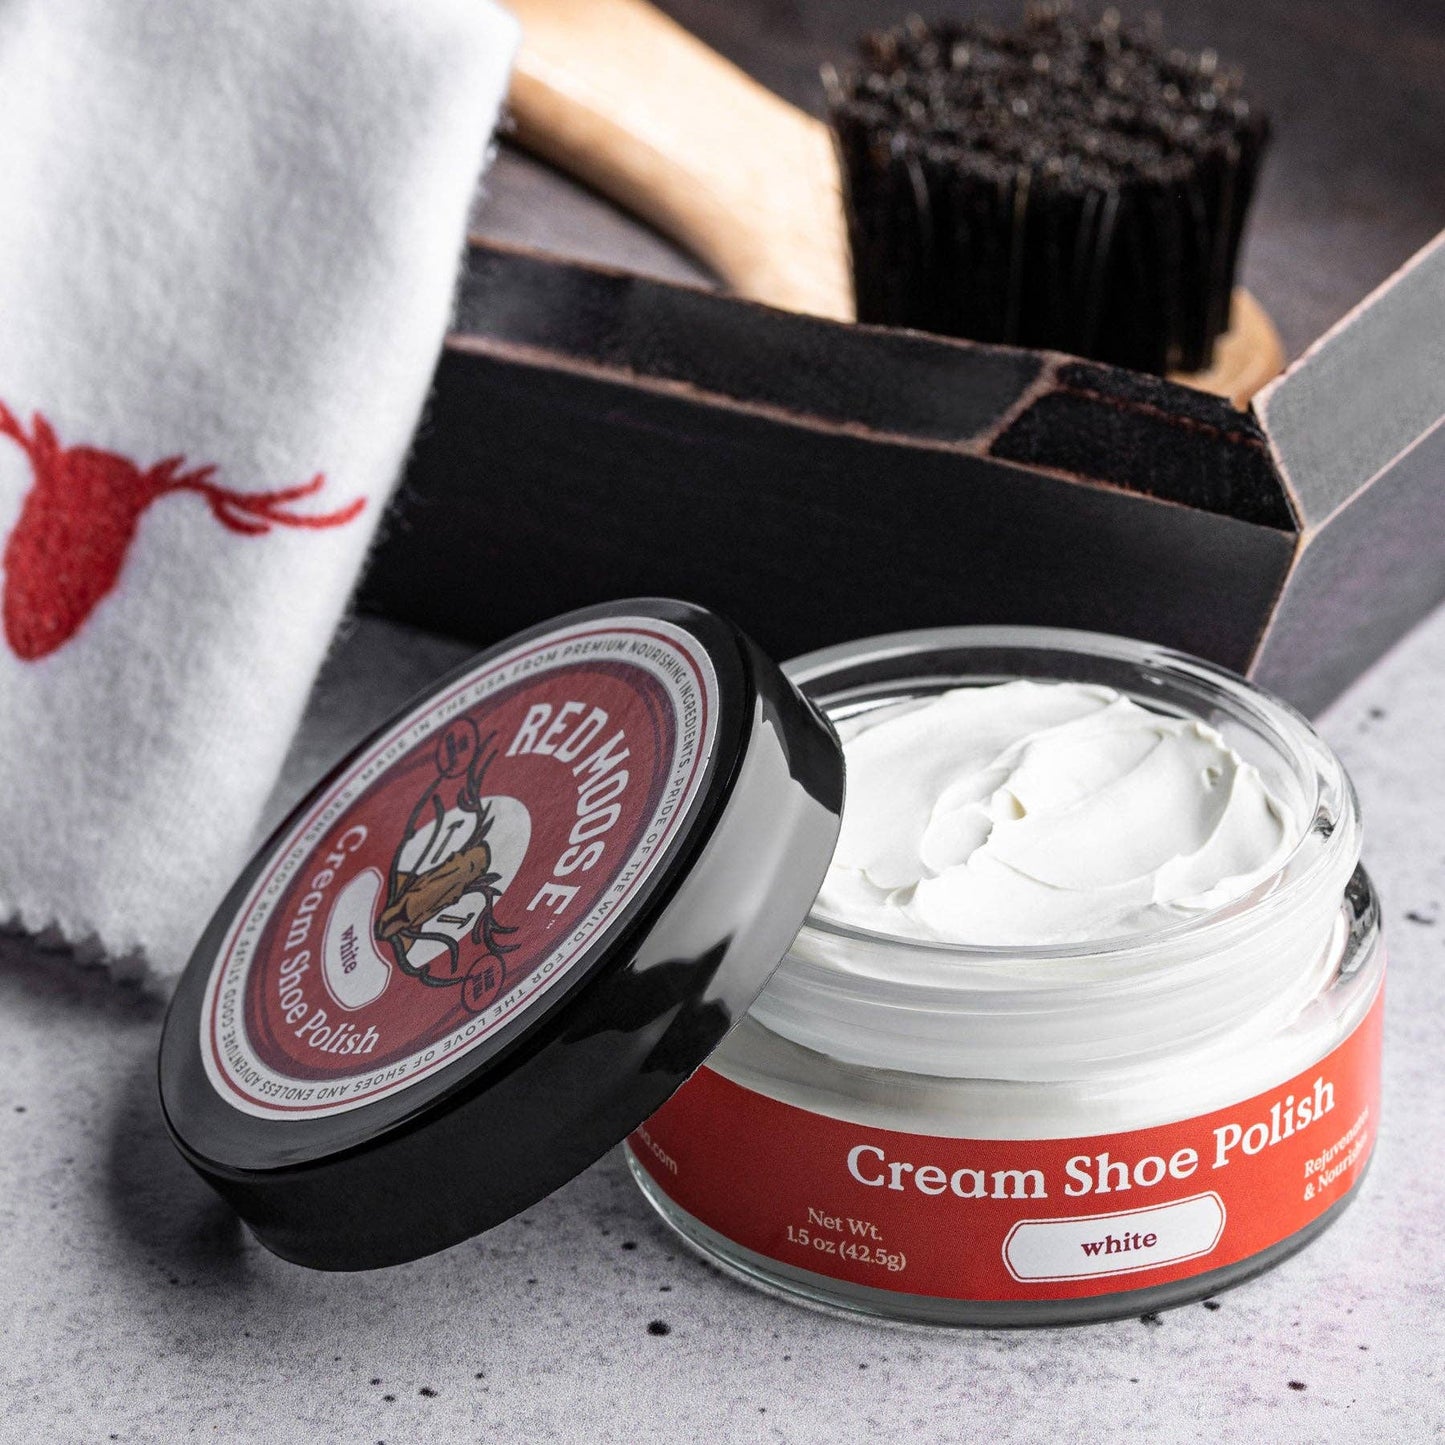 Cream Shoe Polish: Neutral